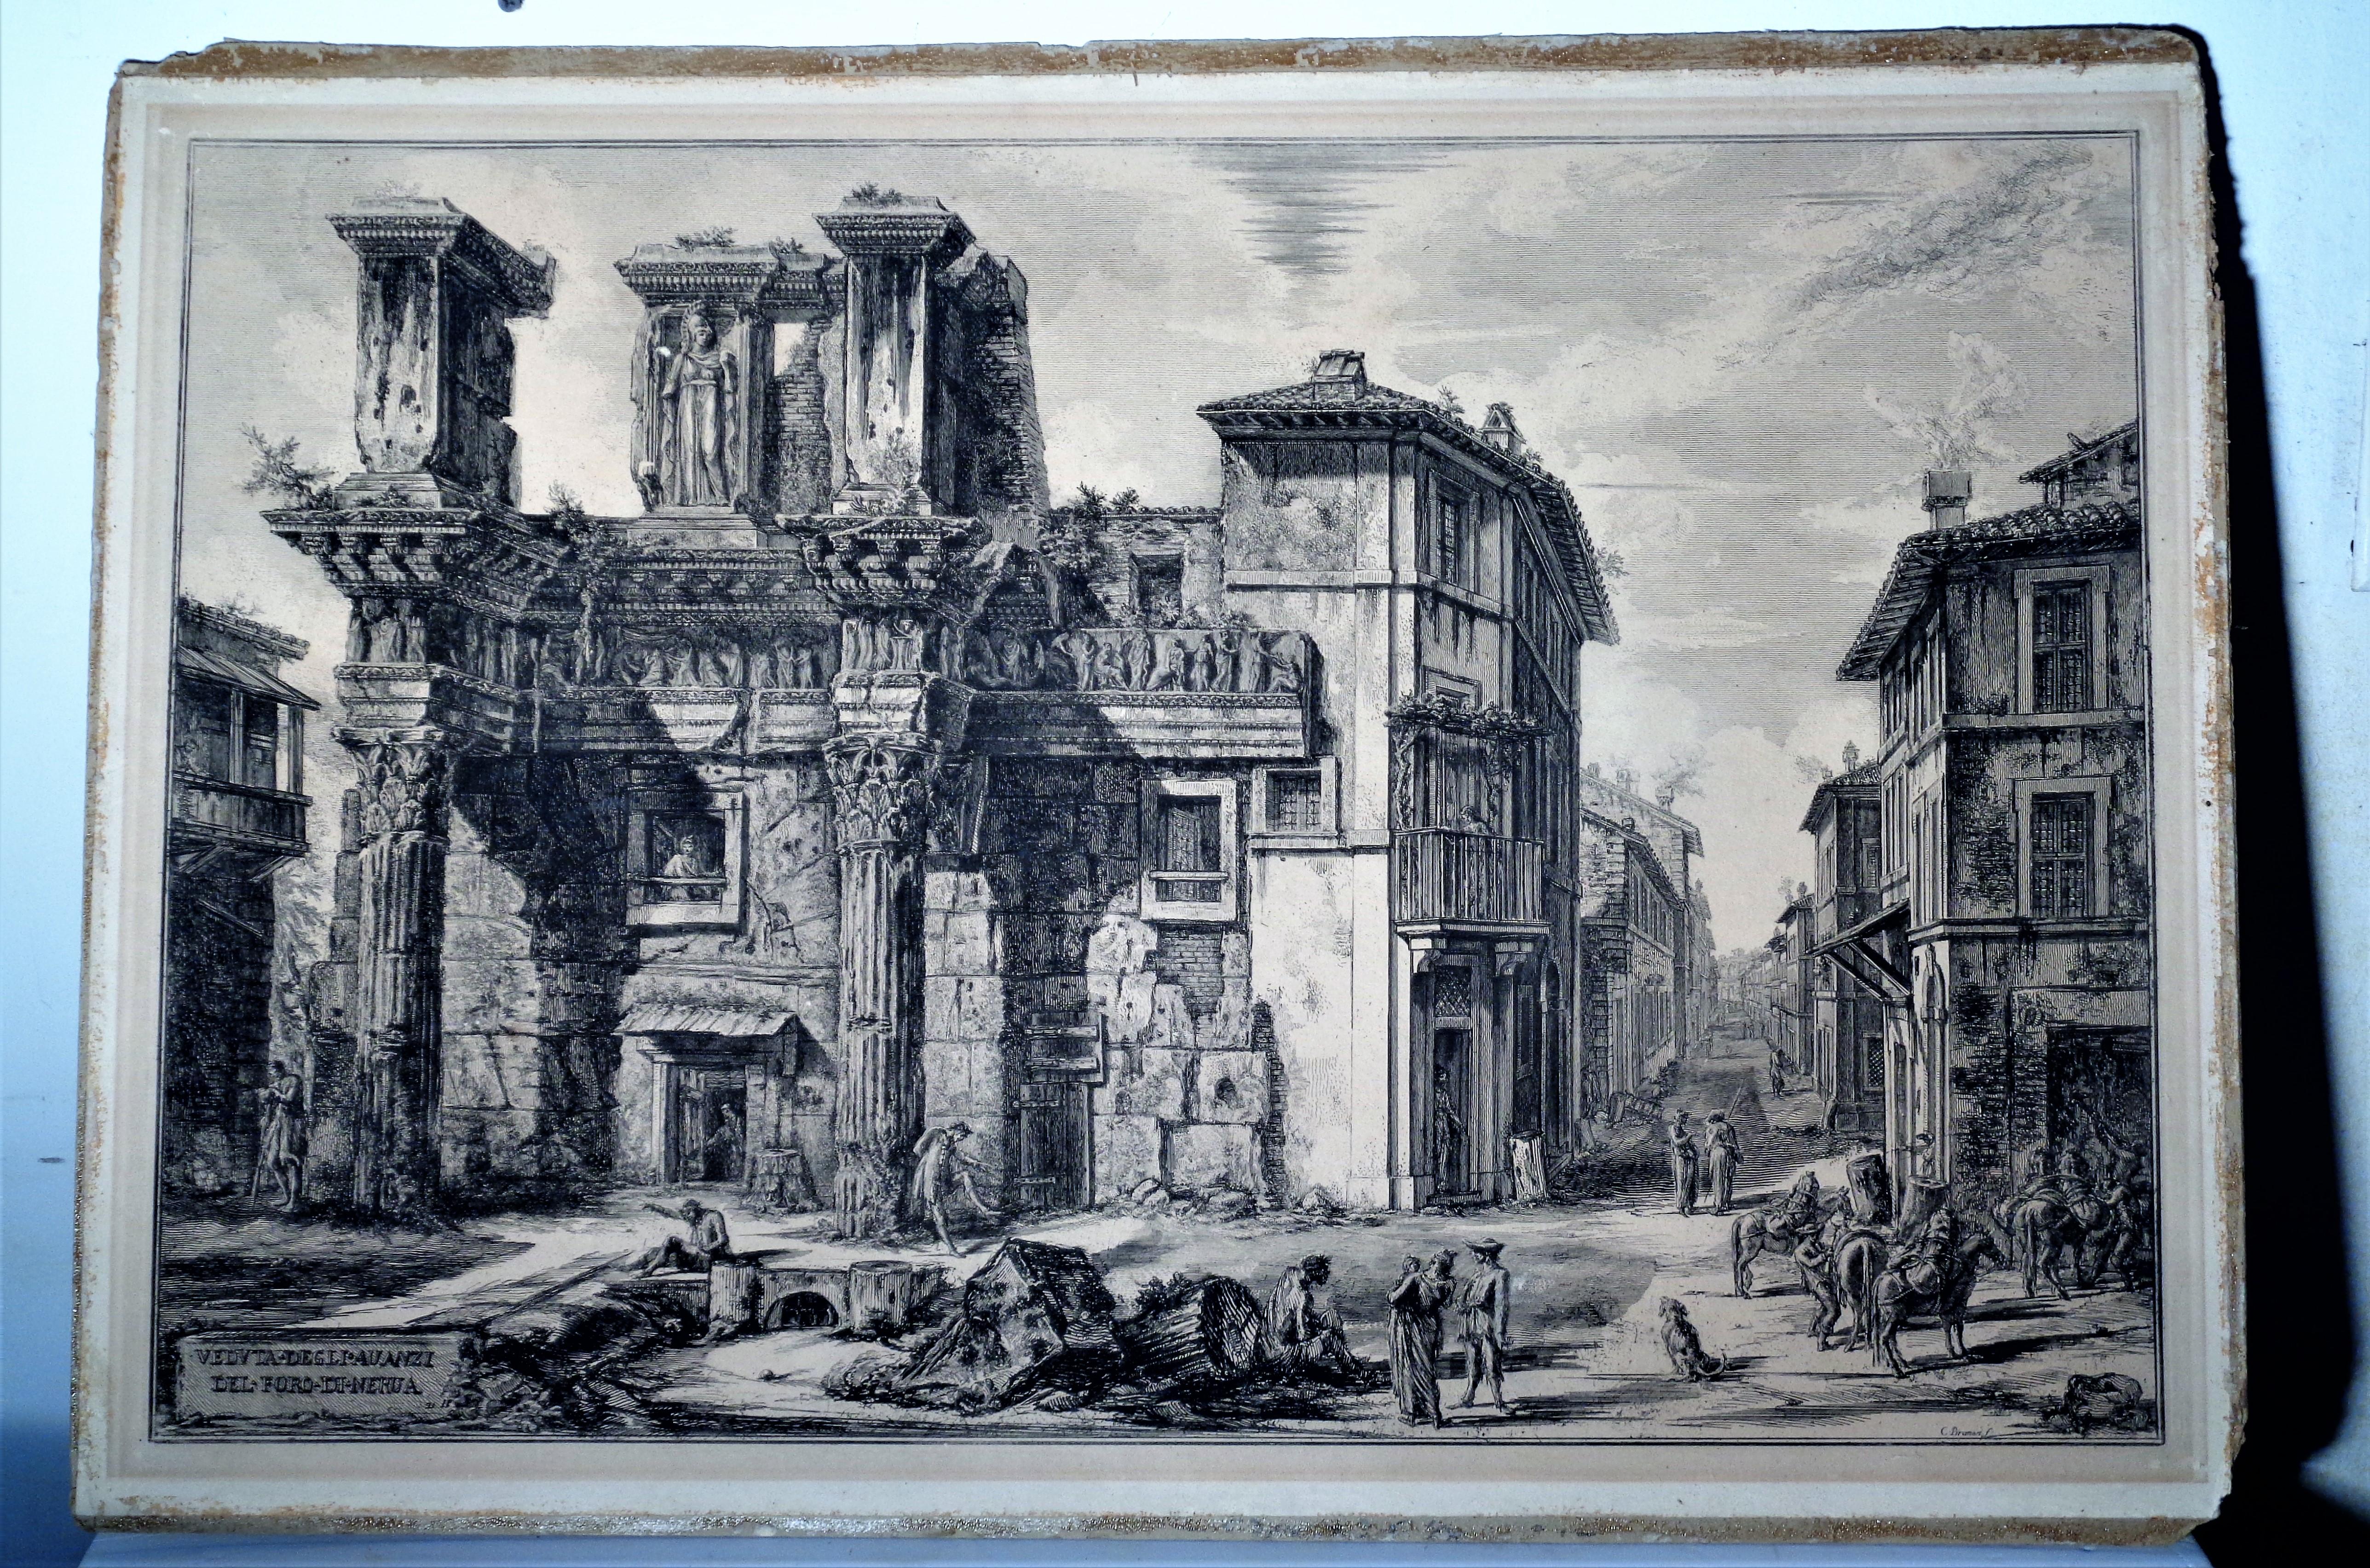 After Giovanni Battista Piranesi, The Forum of Nerva - Francesco Piranesi, 1800 4